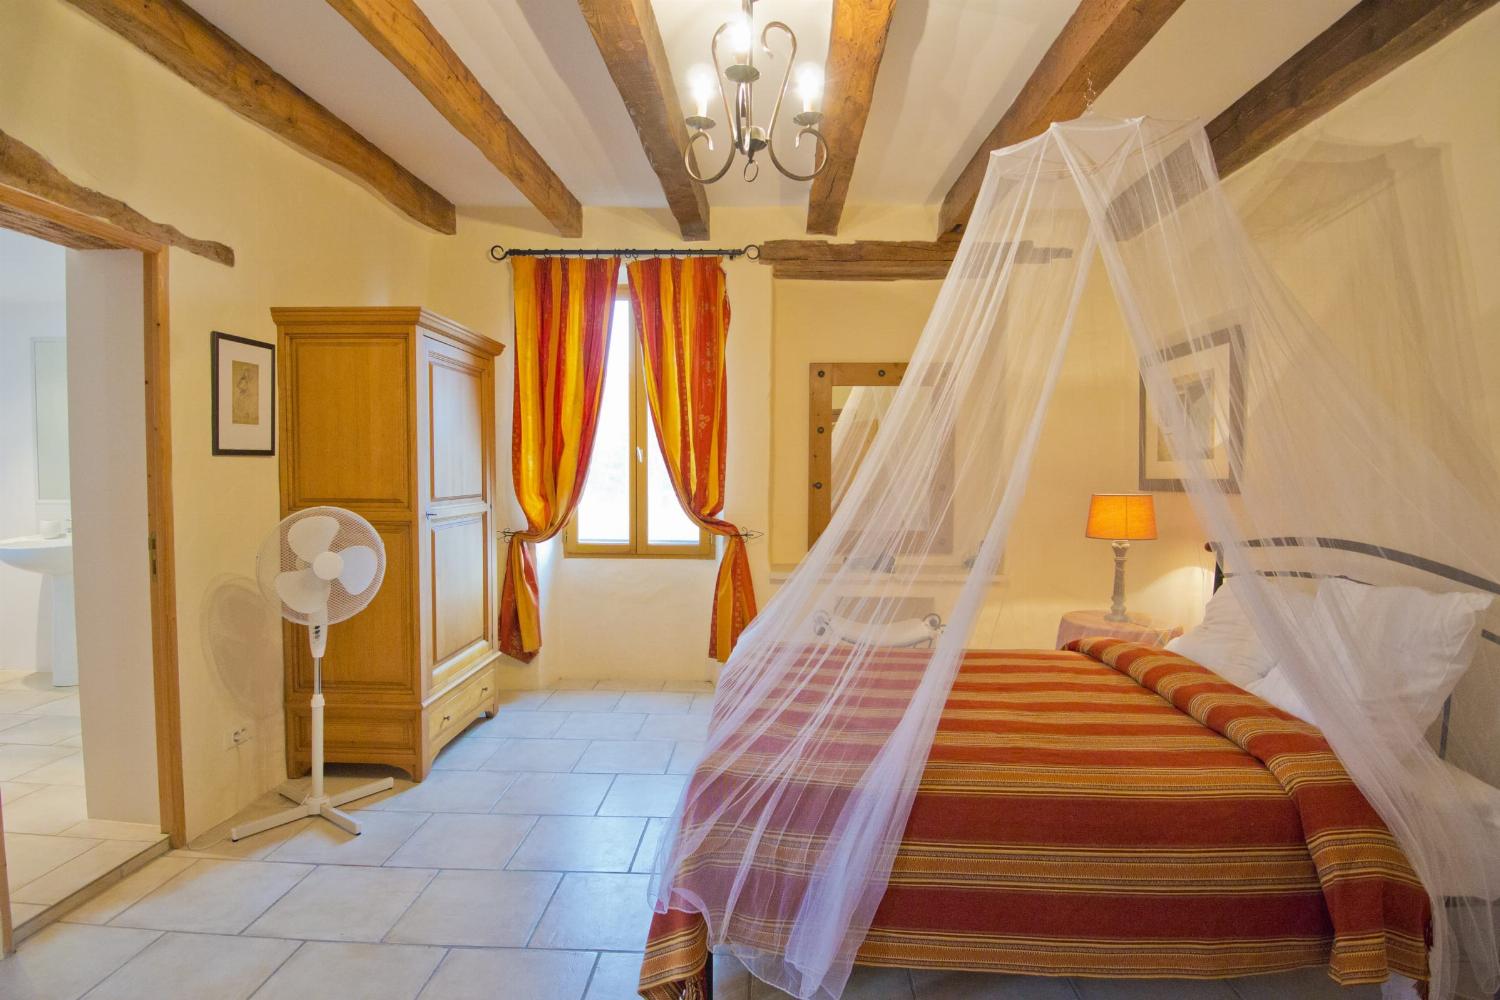 Bedroom | Rental home in Tarn-en-Garonne